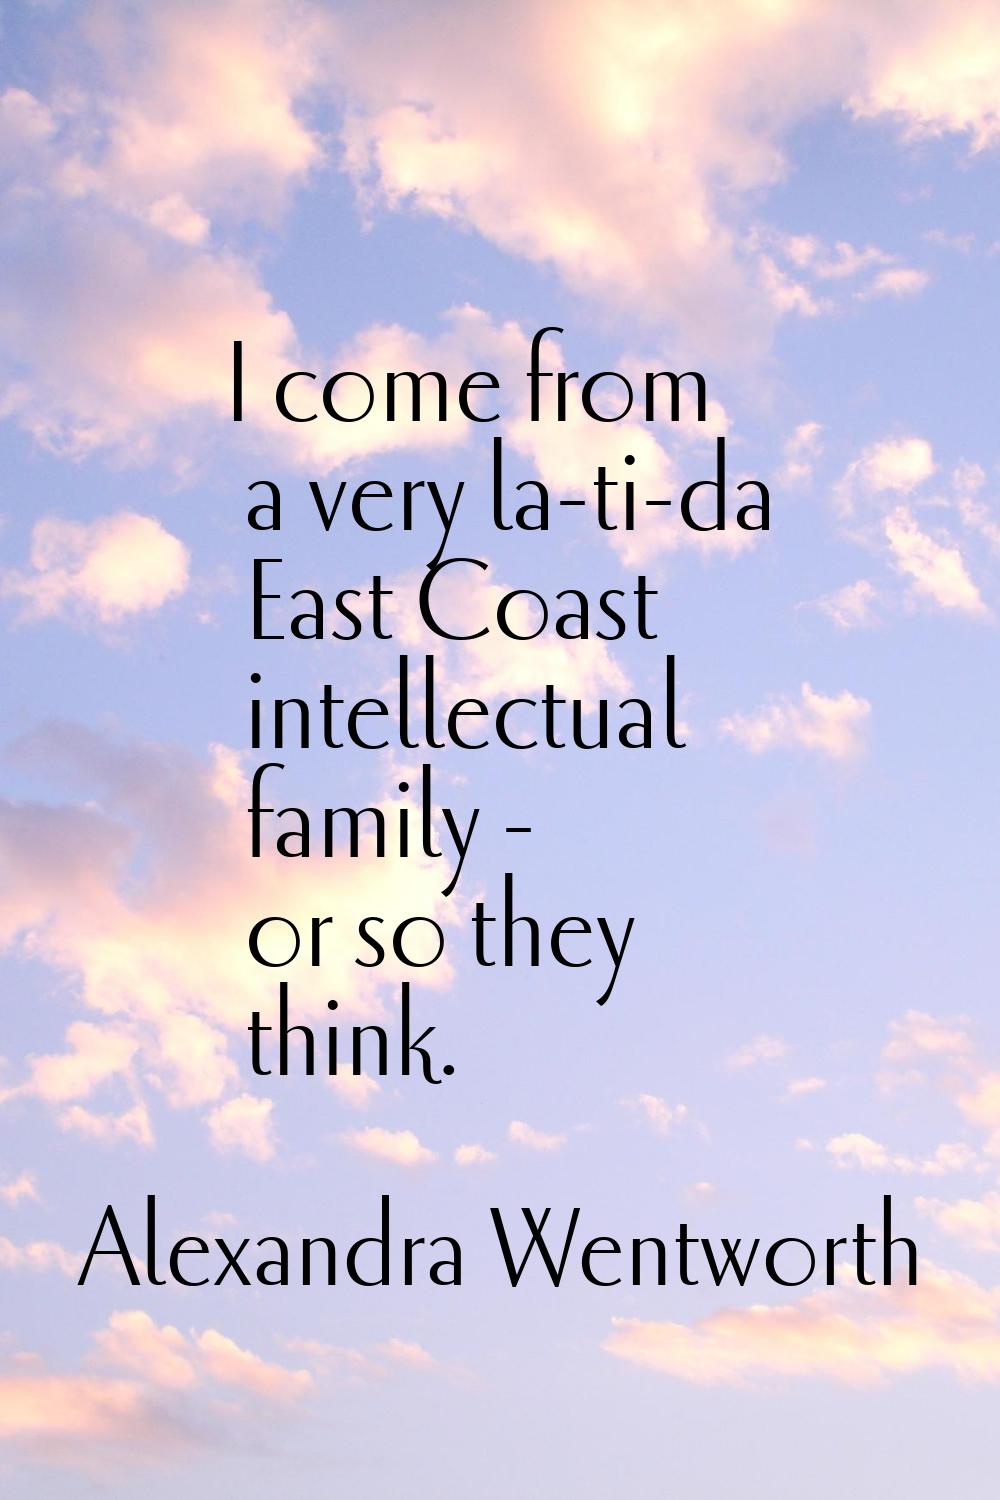 I come from a very la-ti-da East Coast intellectual family - or so they think.